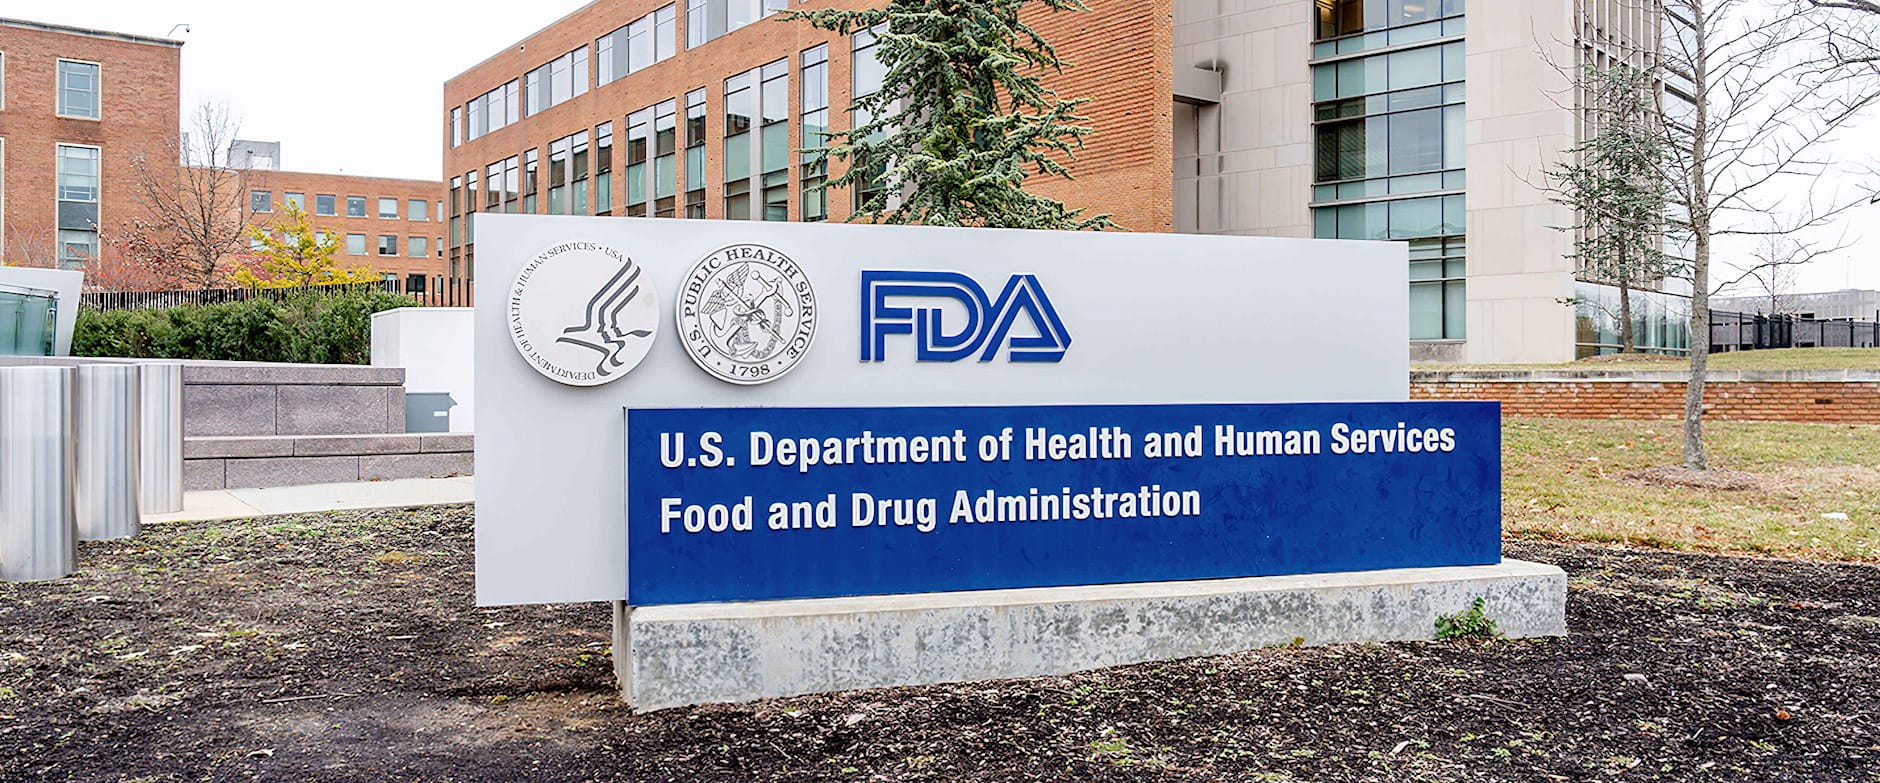 FDA Building sign